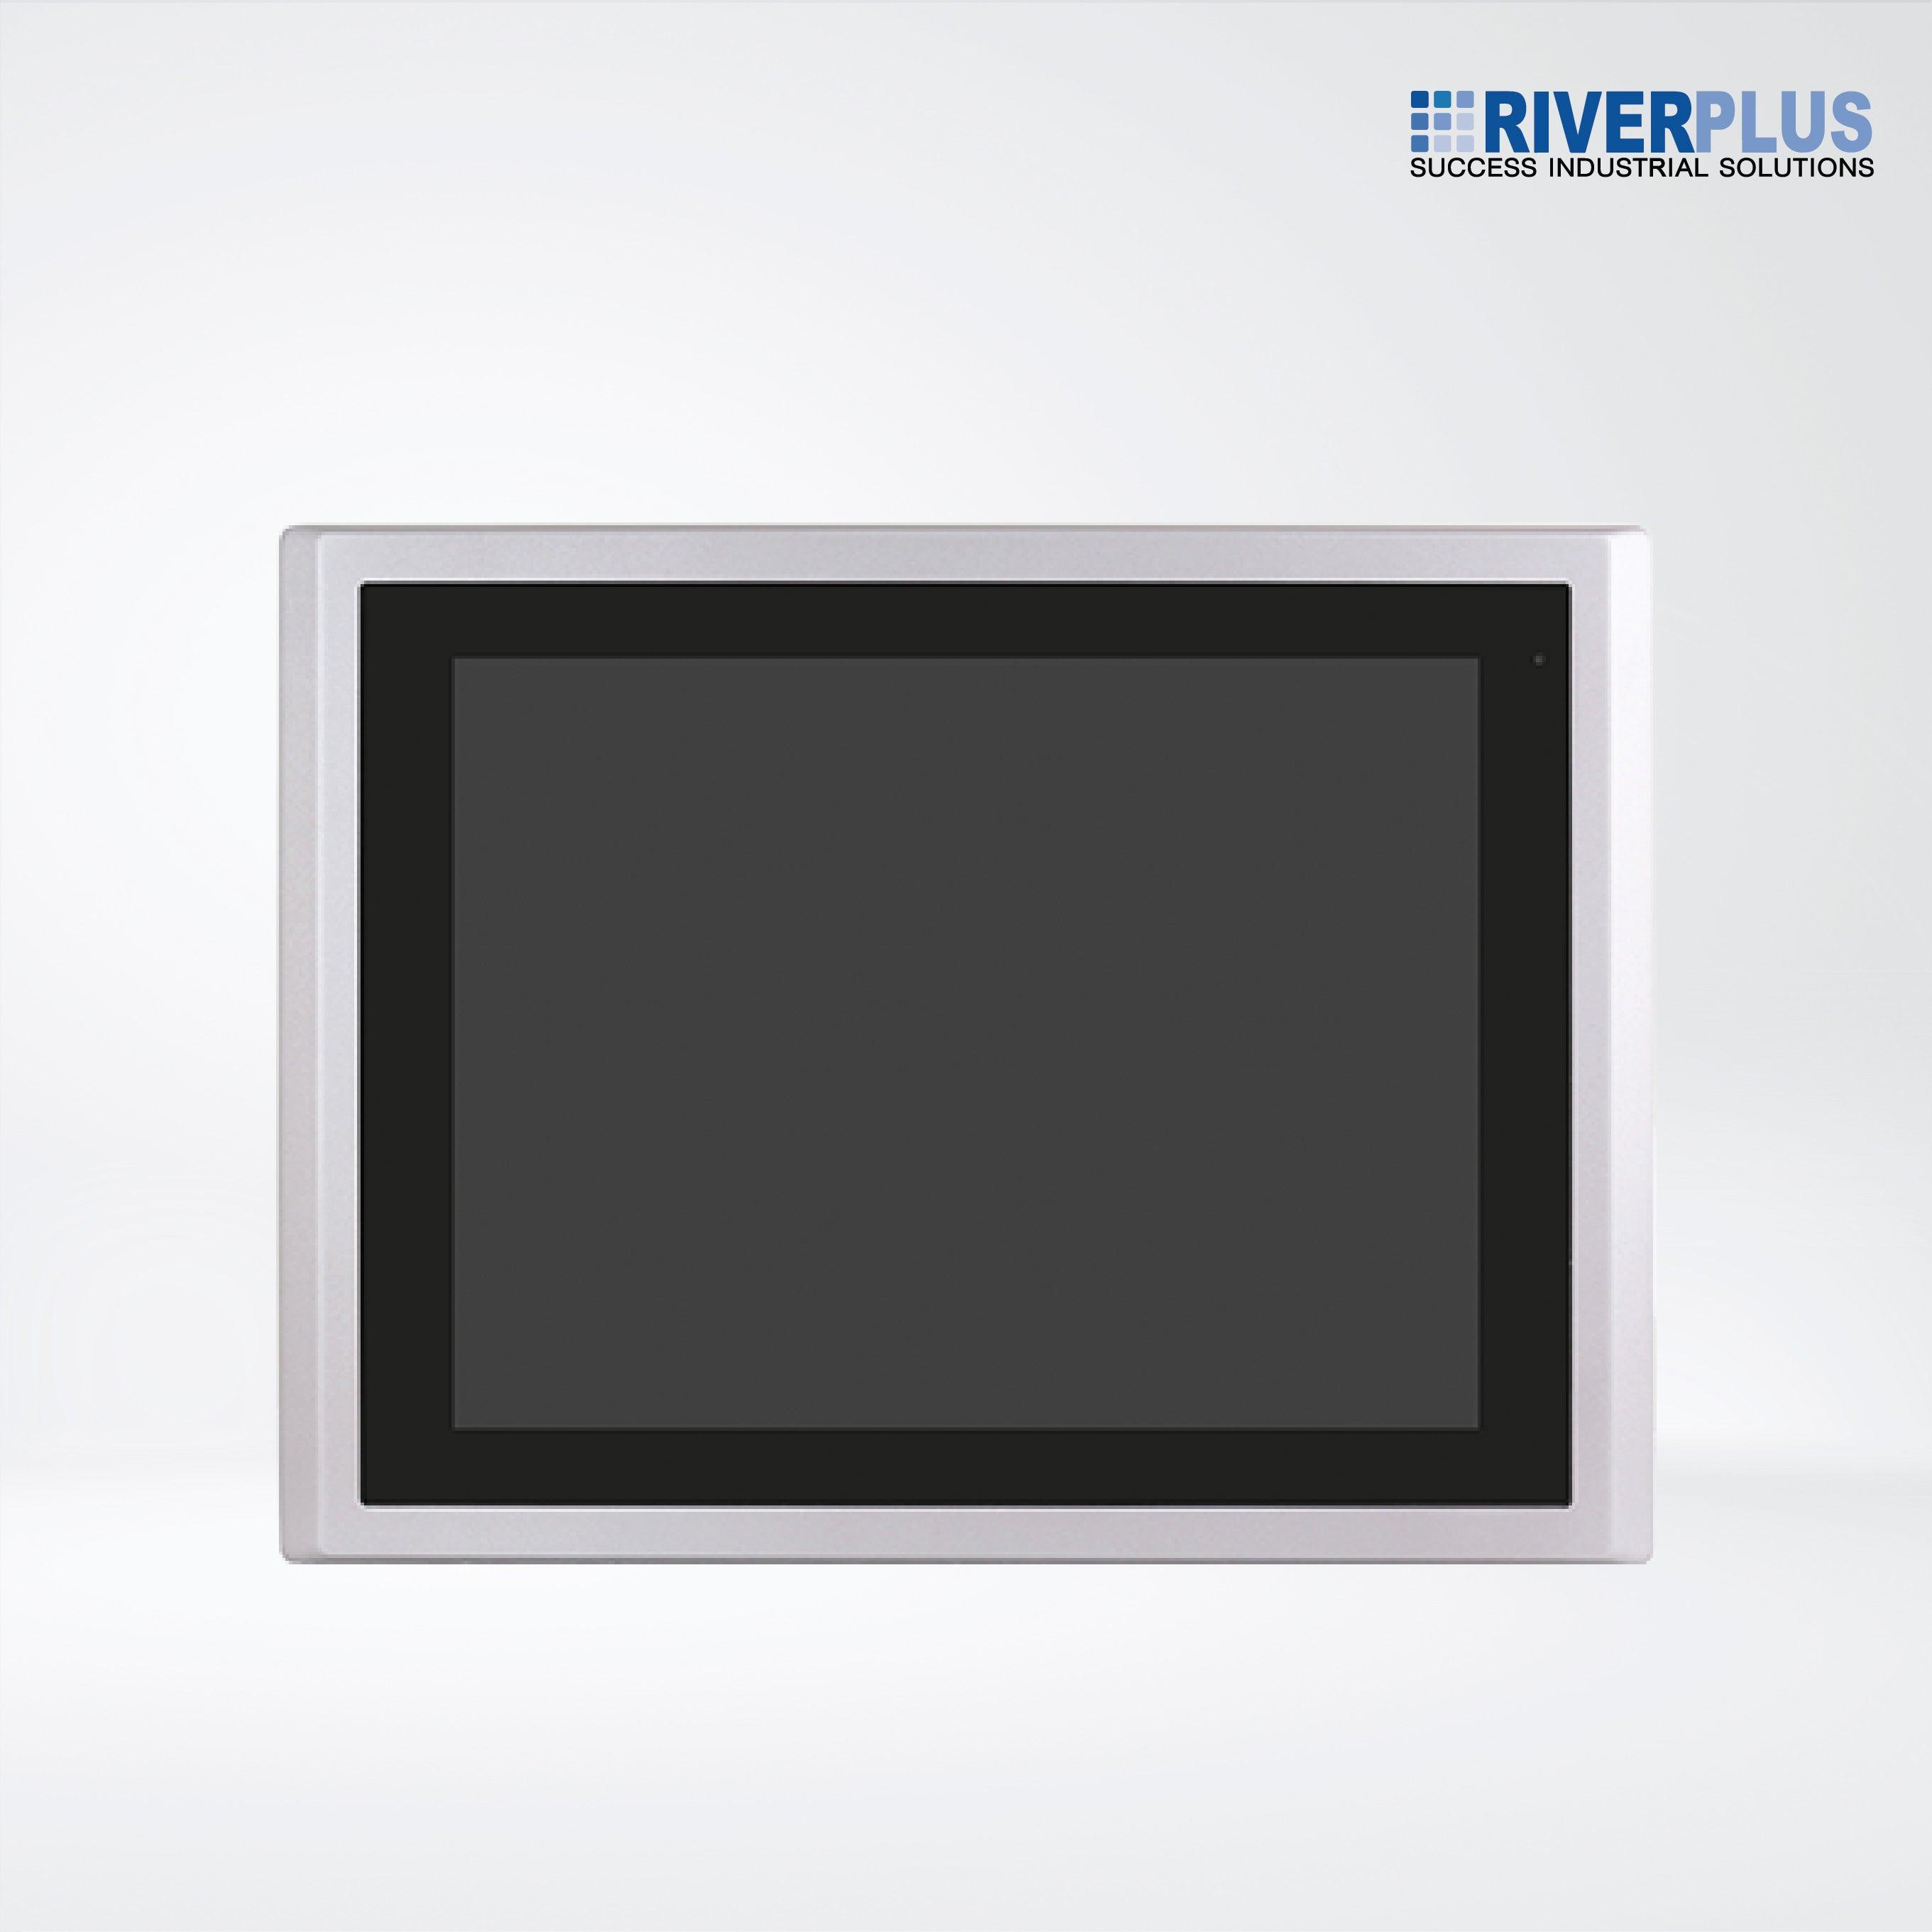 ARCHMI-915AR Intel Core i5, Fanless Industrial Compact Size Panel PC - Riverplus